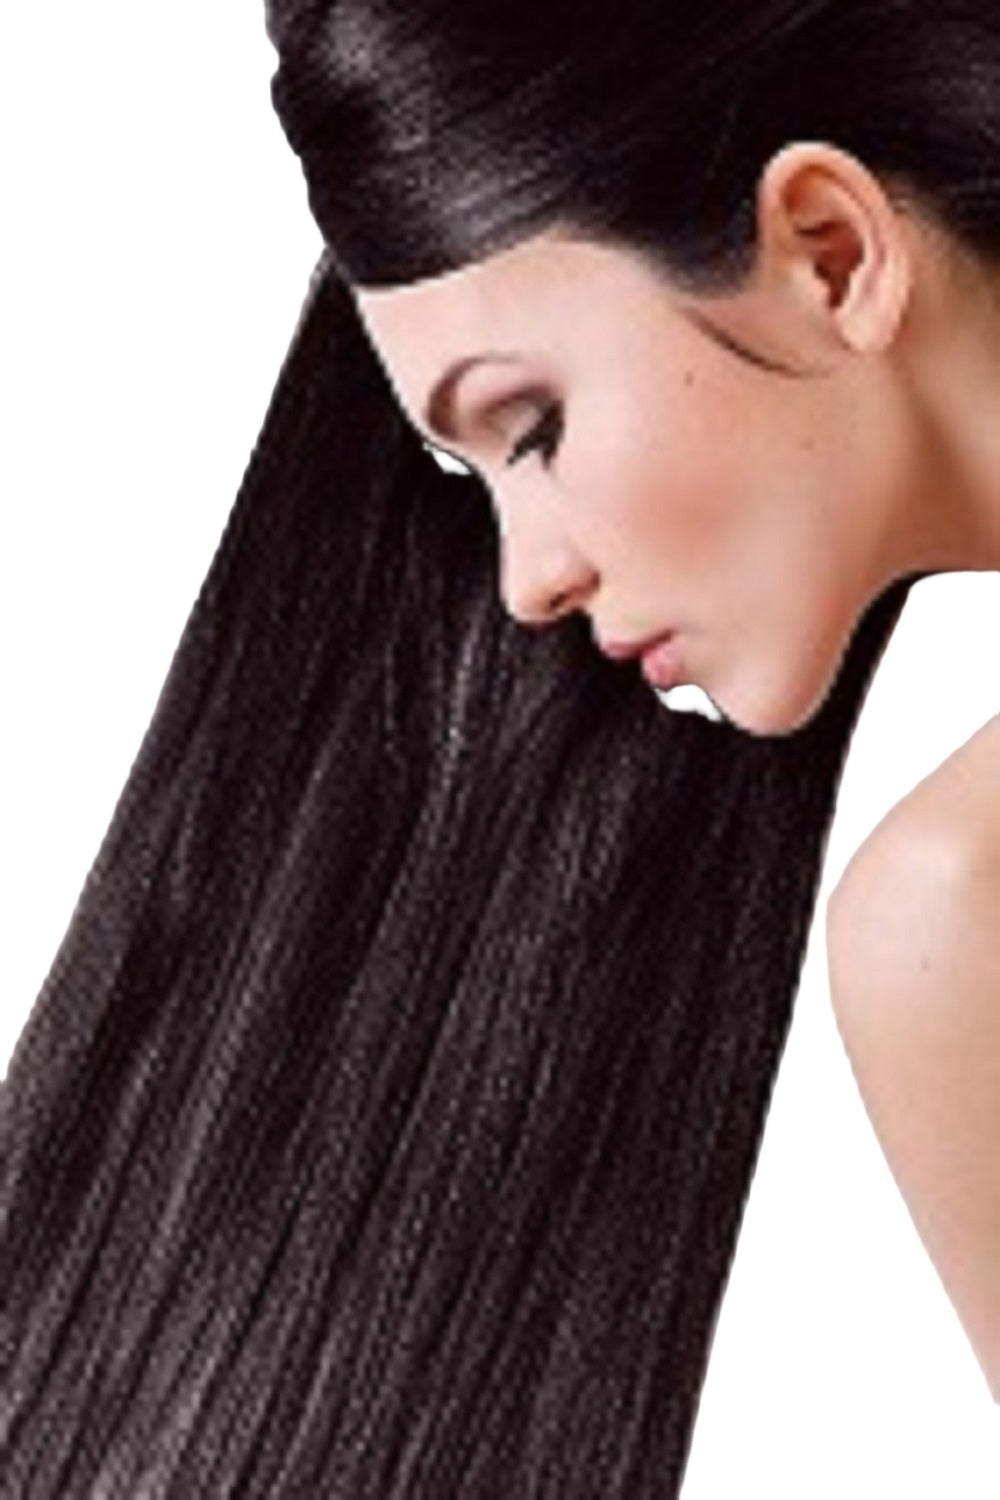 01 Sanotint Classic Black unisex hair dye without ammonia